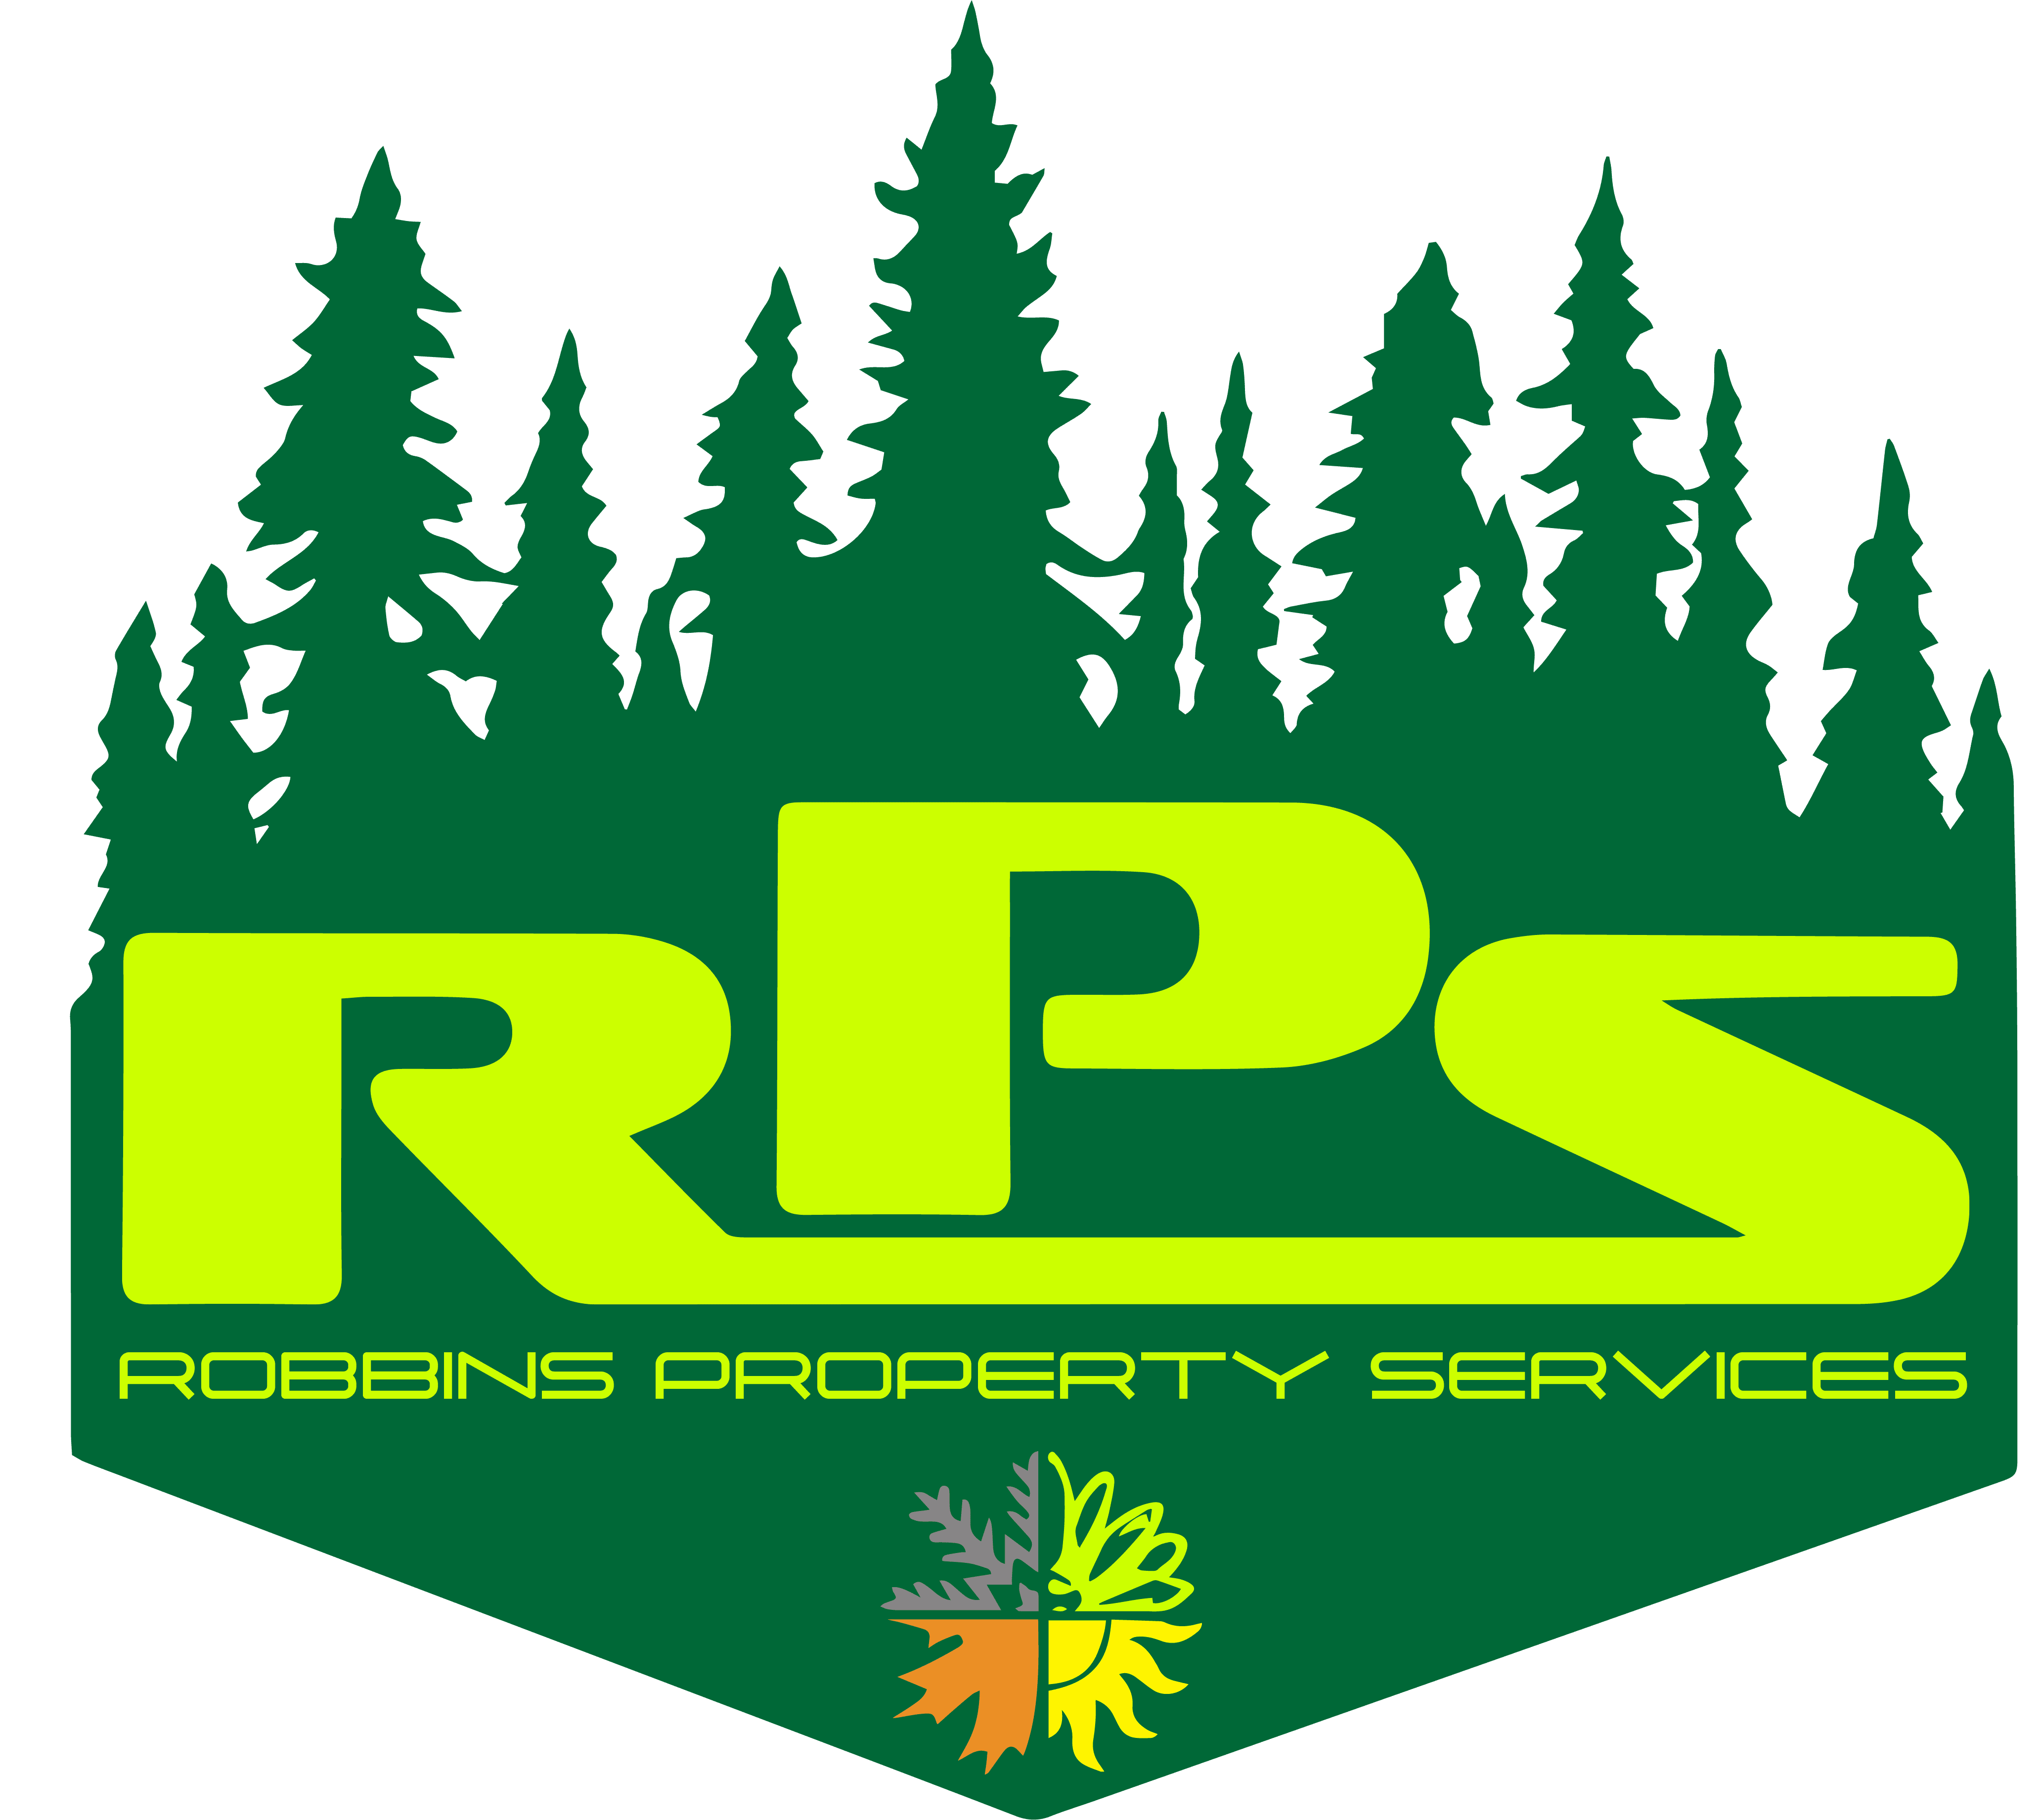 Robbins Property Services - Badge Logo for Landscape Services